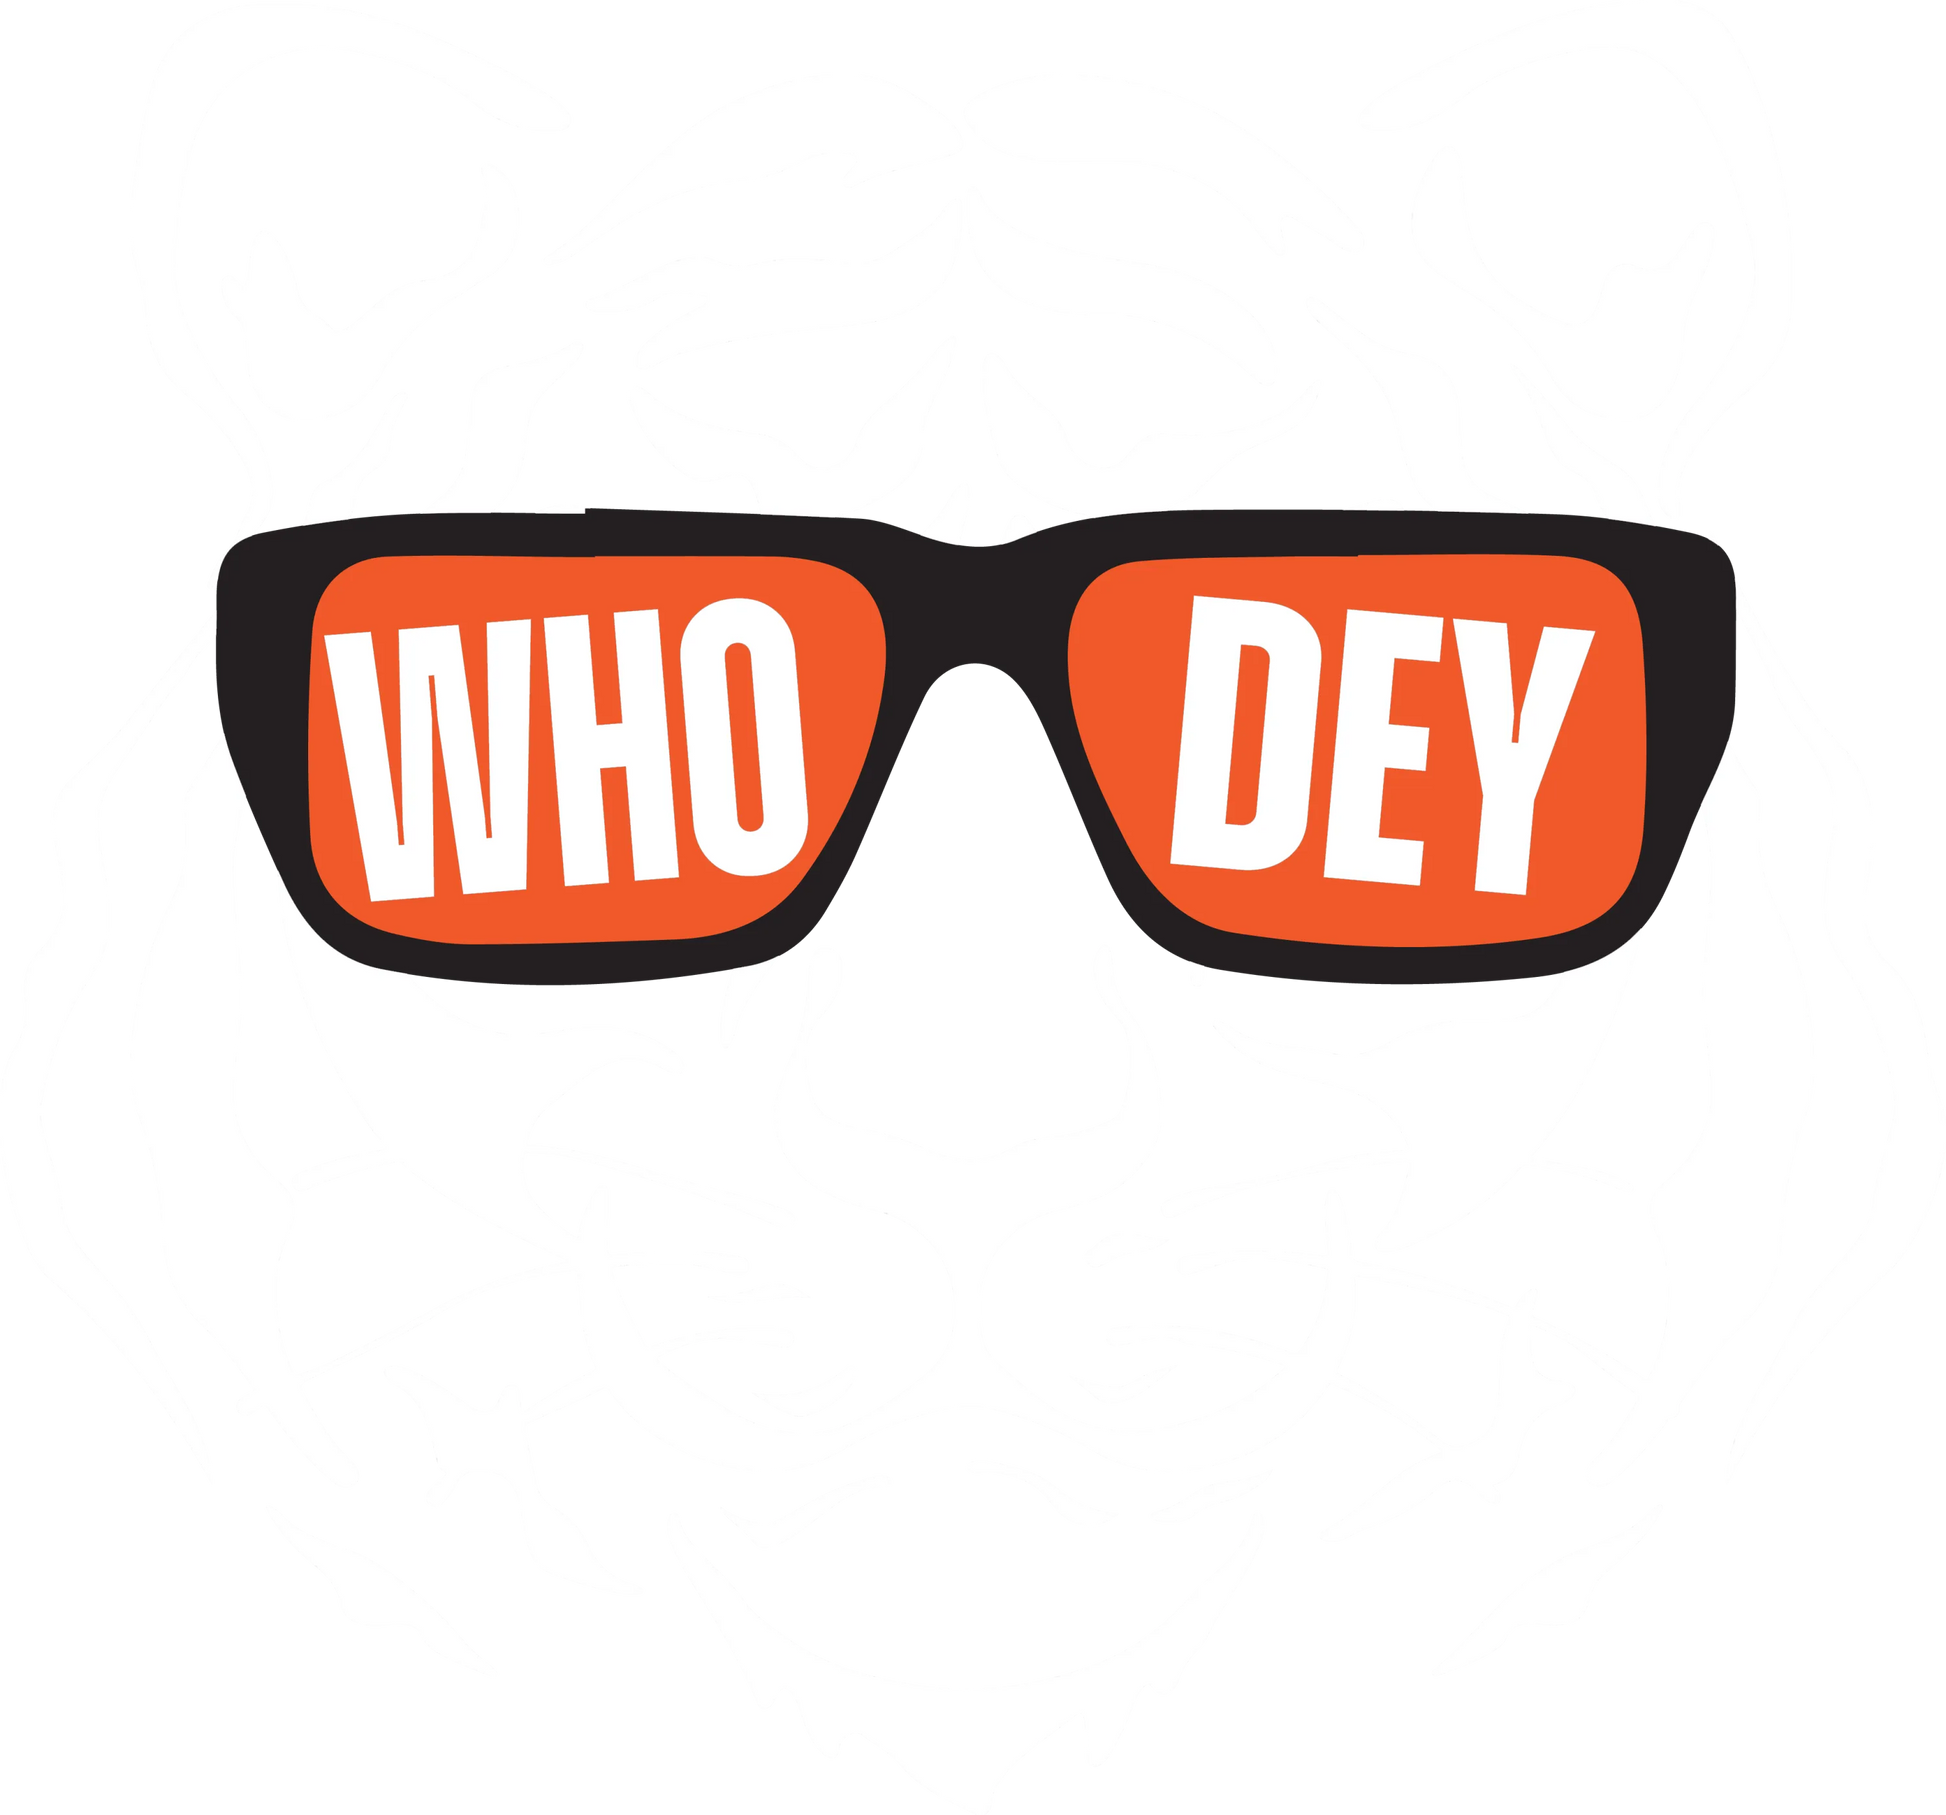 CB25 - "Who Dey White Tiger" DTF Transfer, DTF Transfer, Apparel & Accessories, Ace DTF